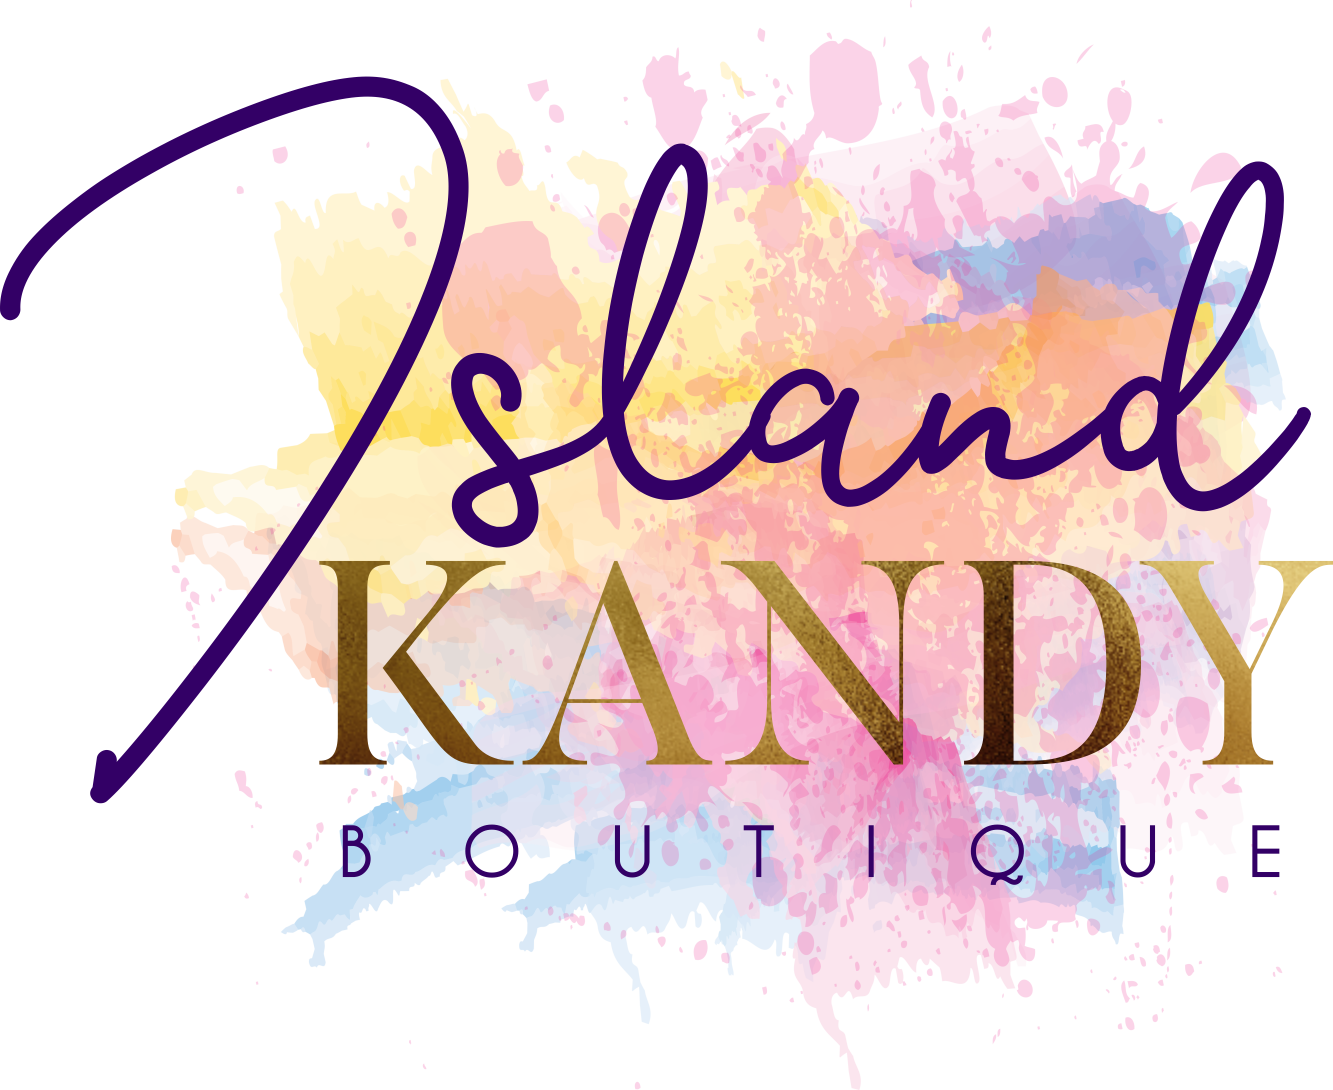 Island Kandy